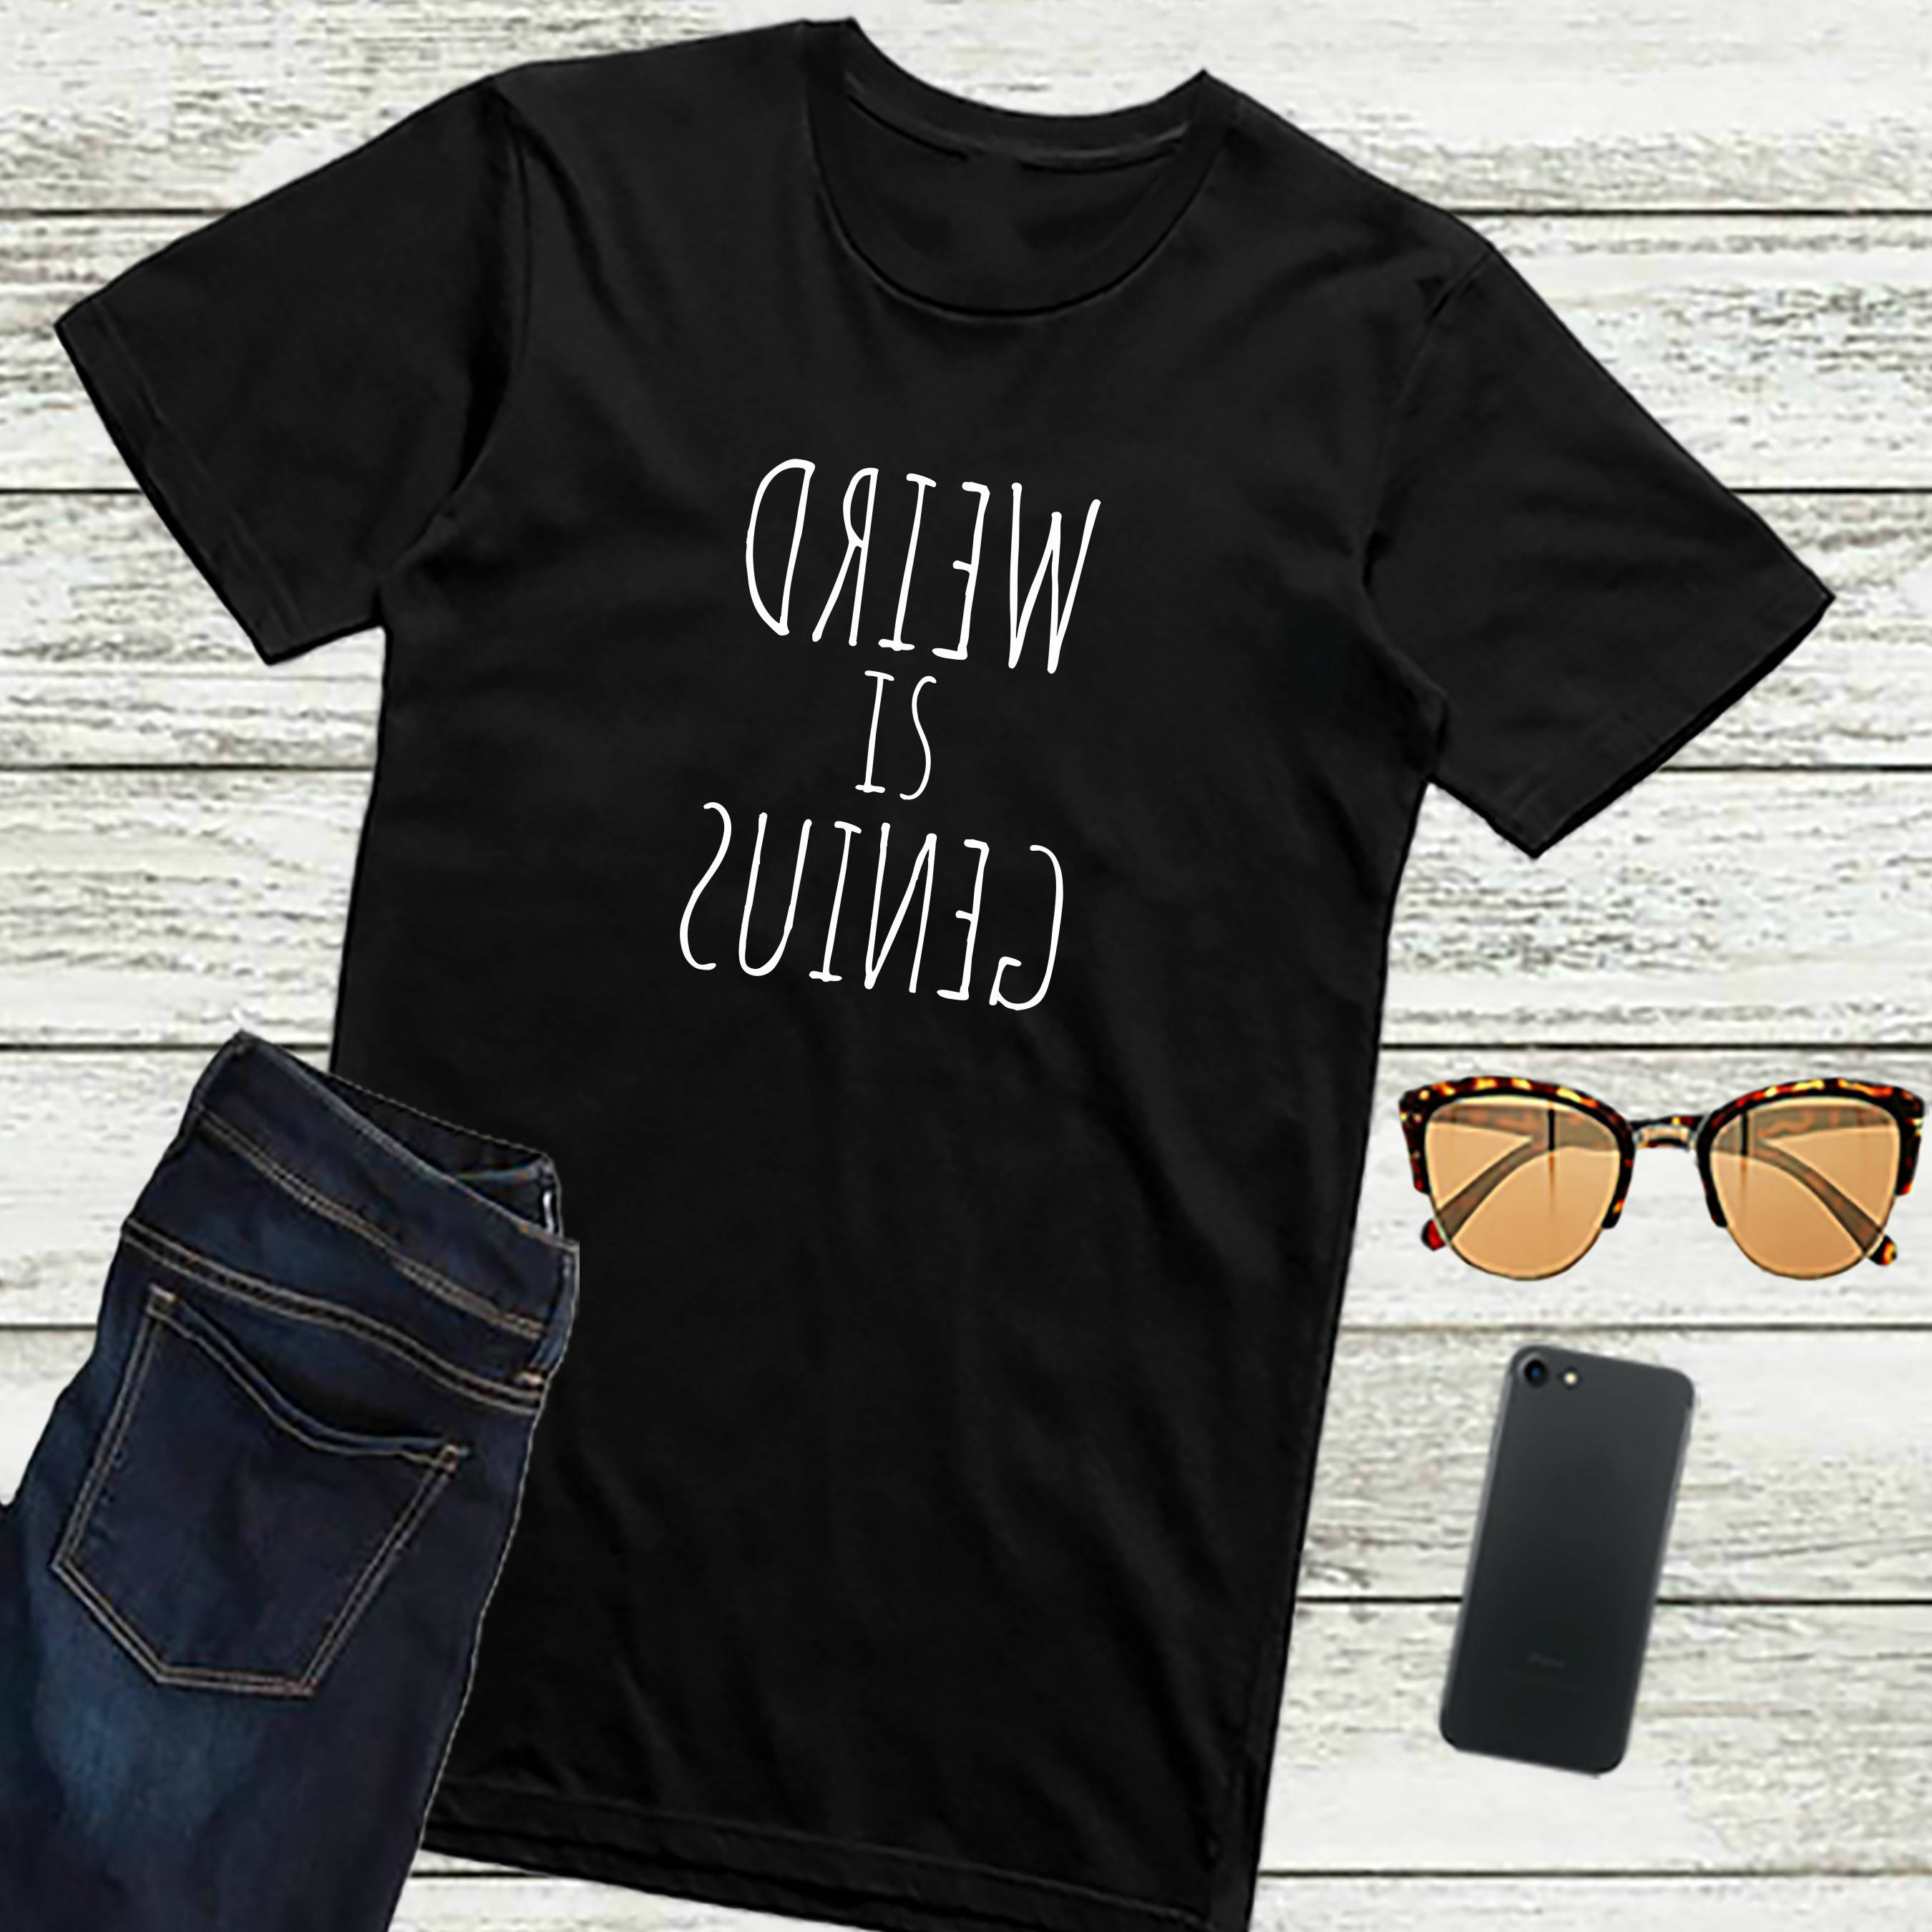 Introverts Unite Funny Mens T-Shirt Organic Friendly Nerd Geek Ladies Birthday 